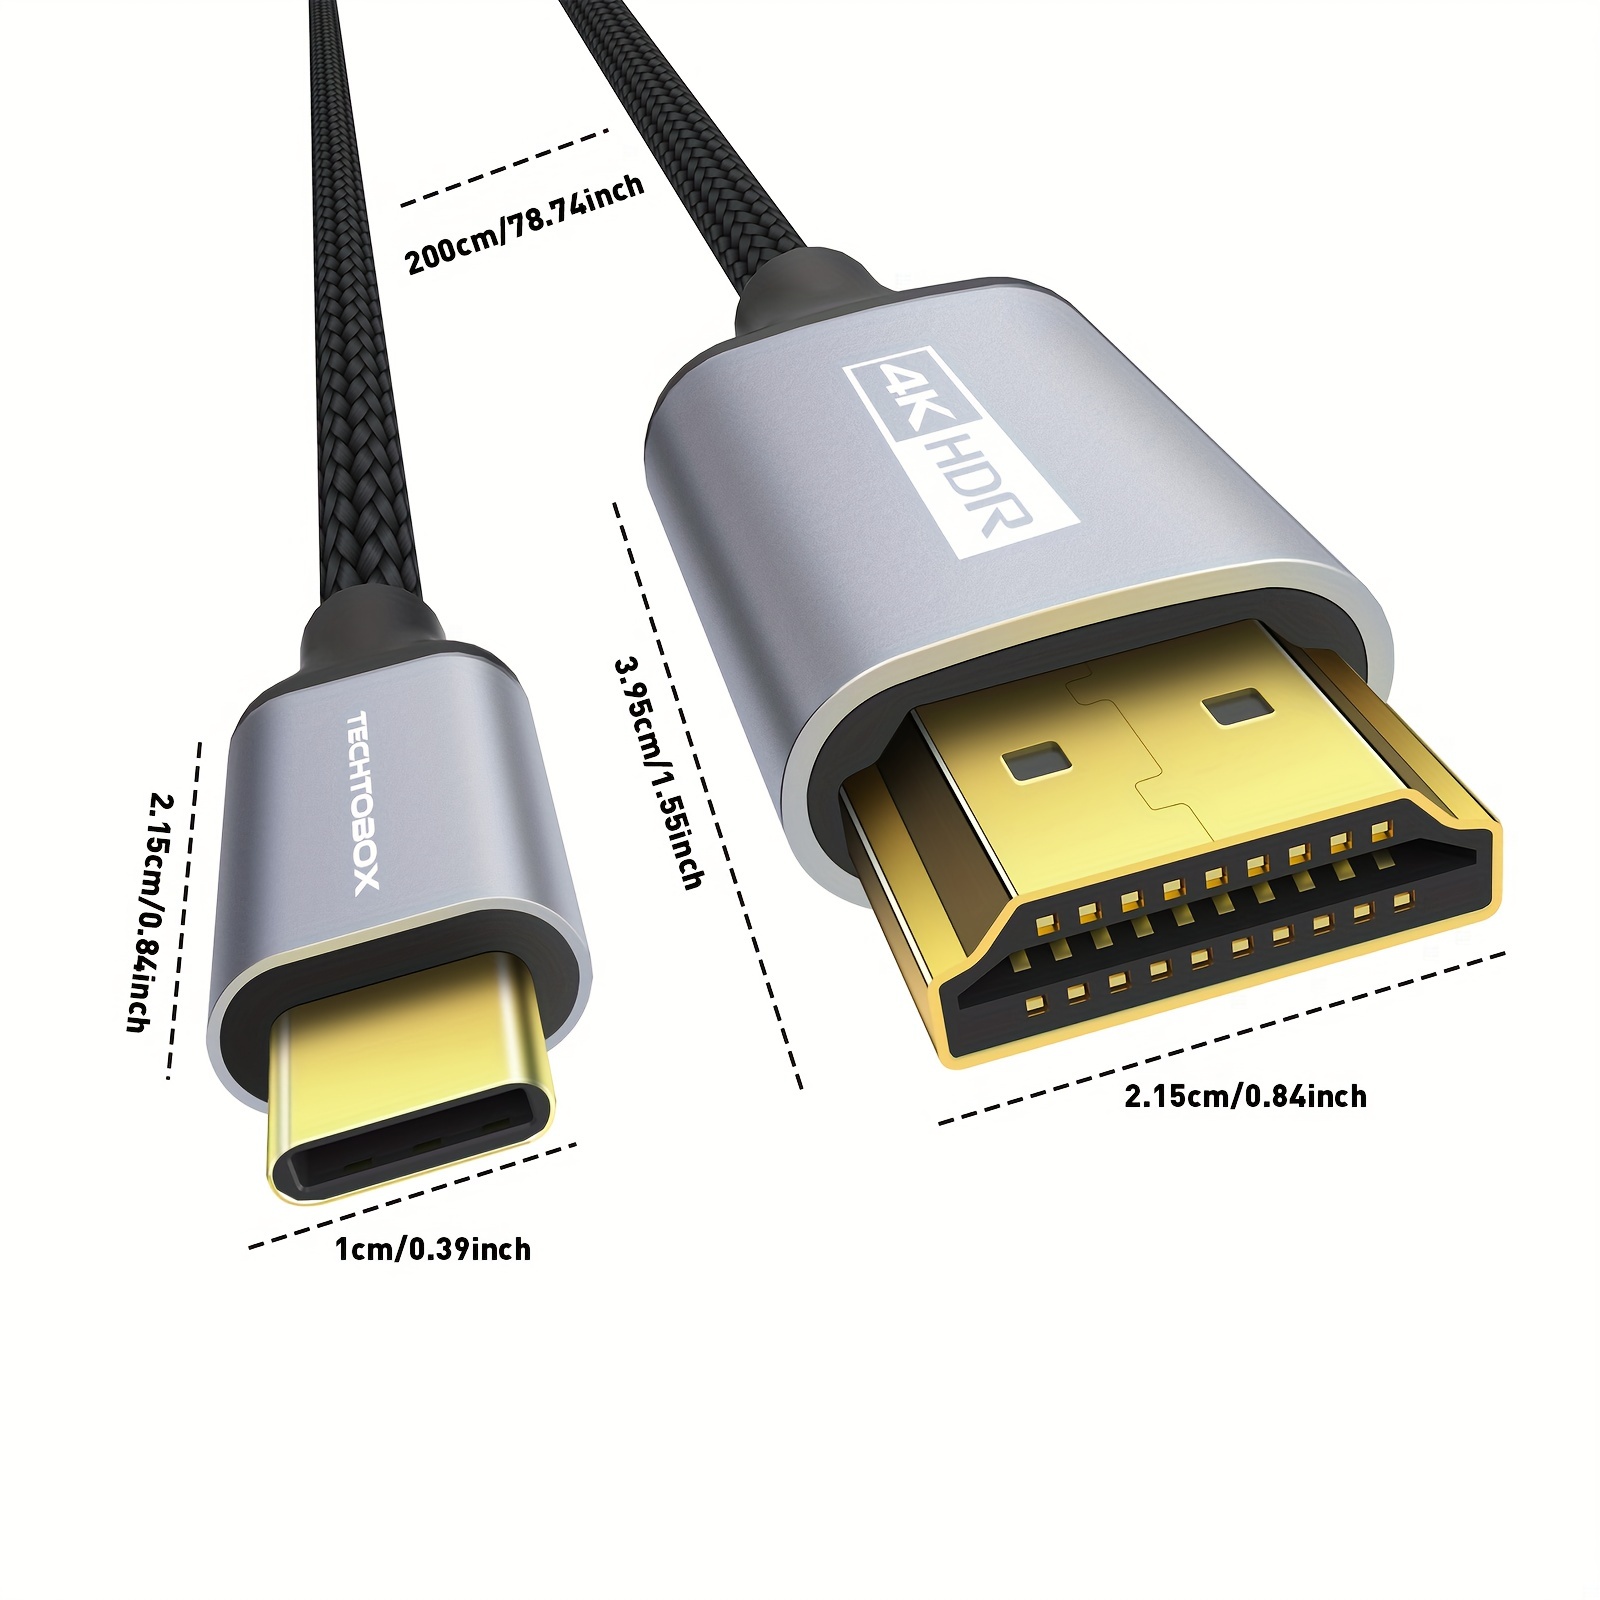 USB-C to DisplayPort Cable - 4k@60hz, 6ft